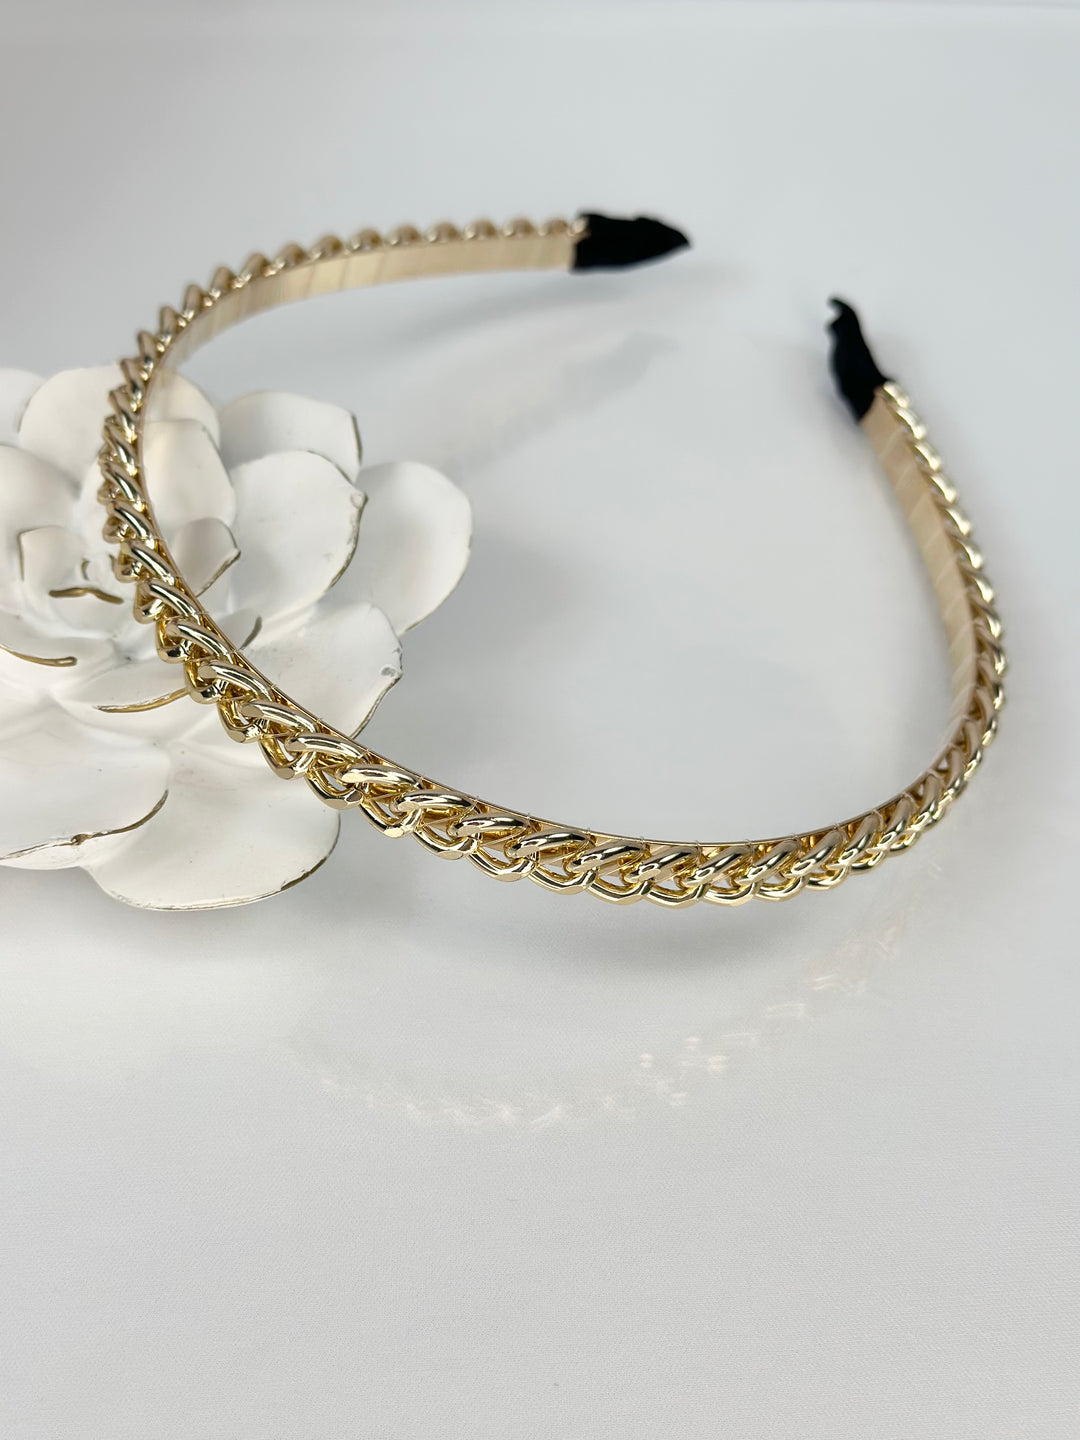 Gold Chain Headband - Style 5673